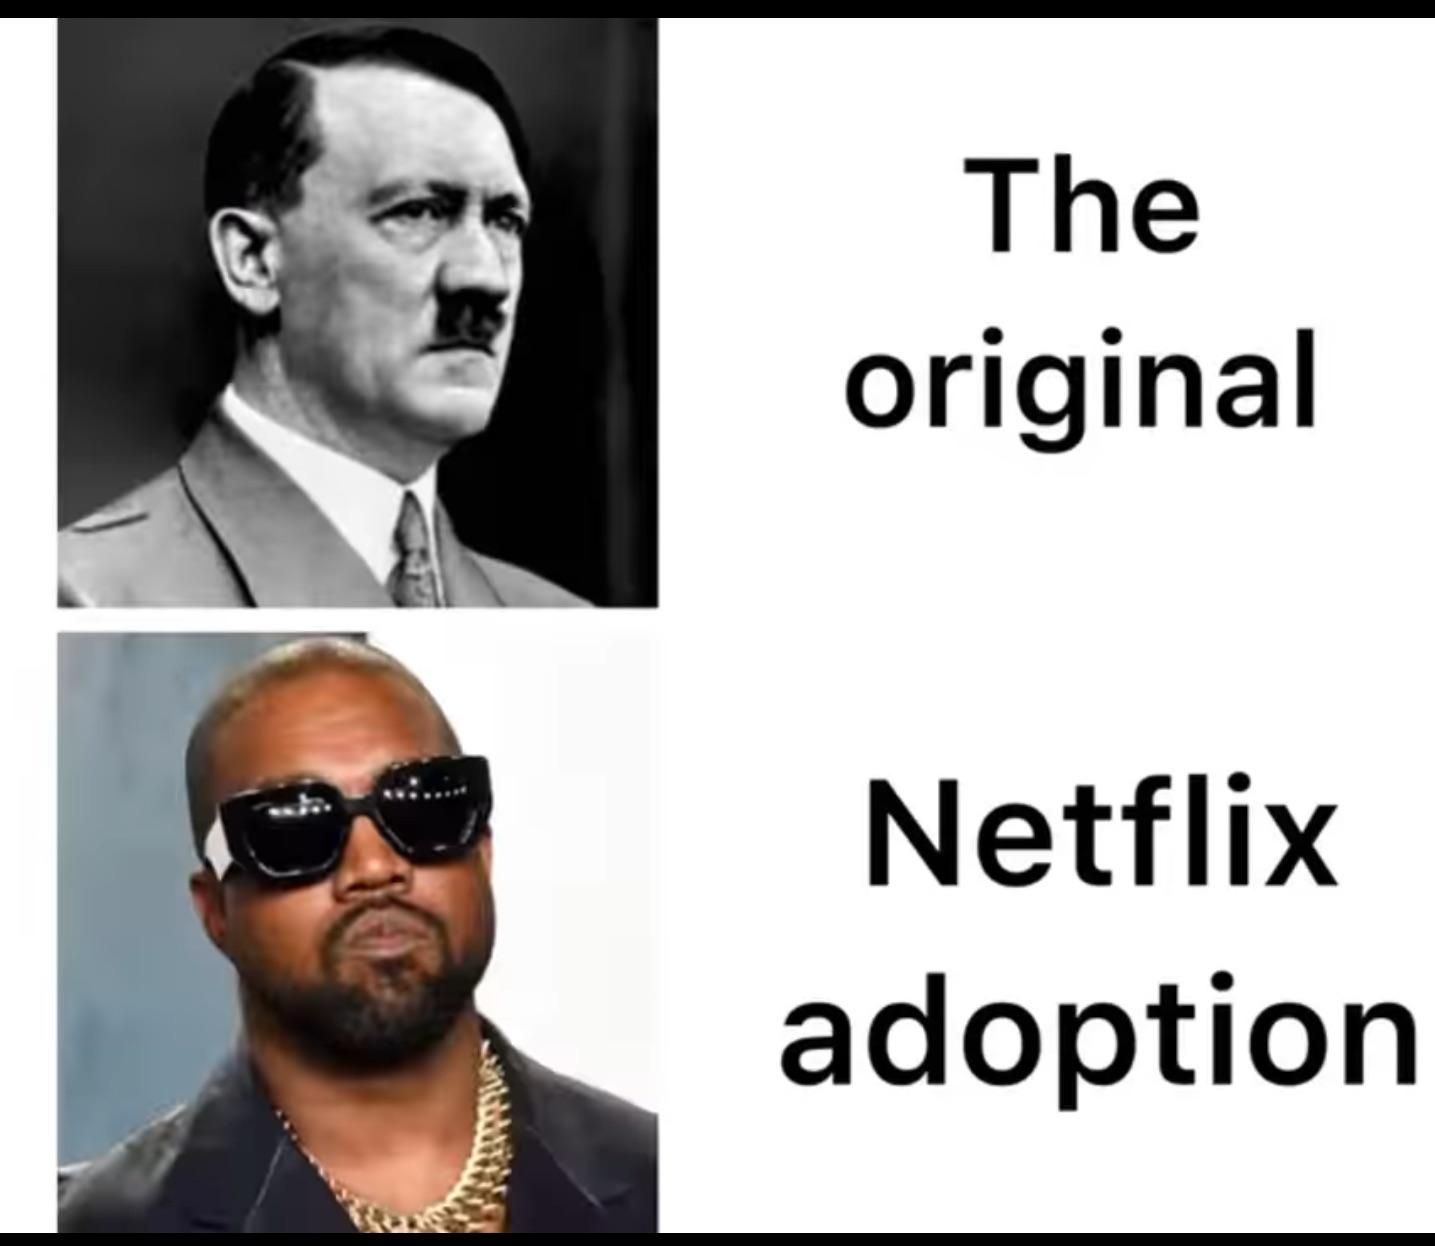 Kanye Hitler?